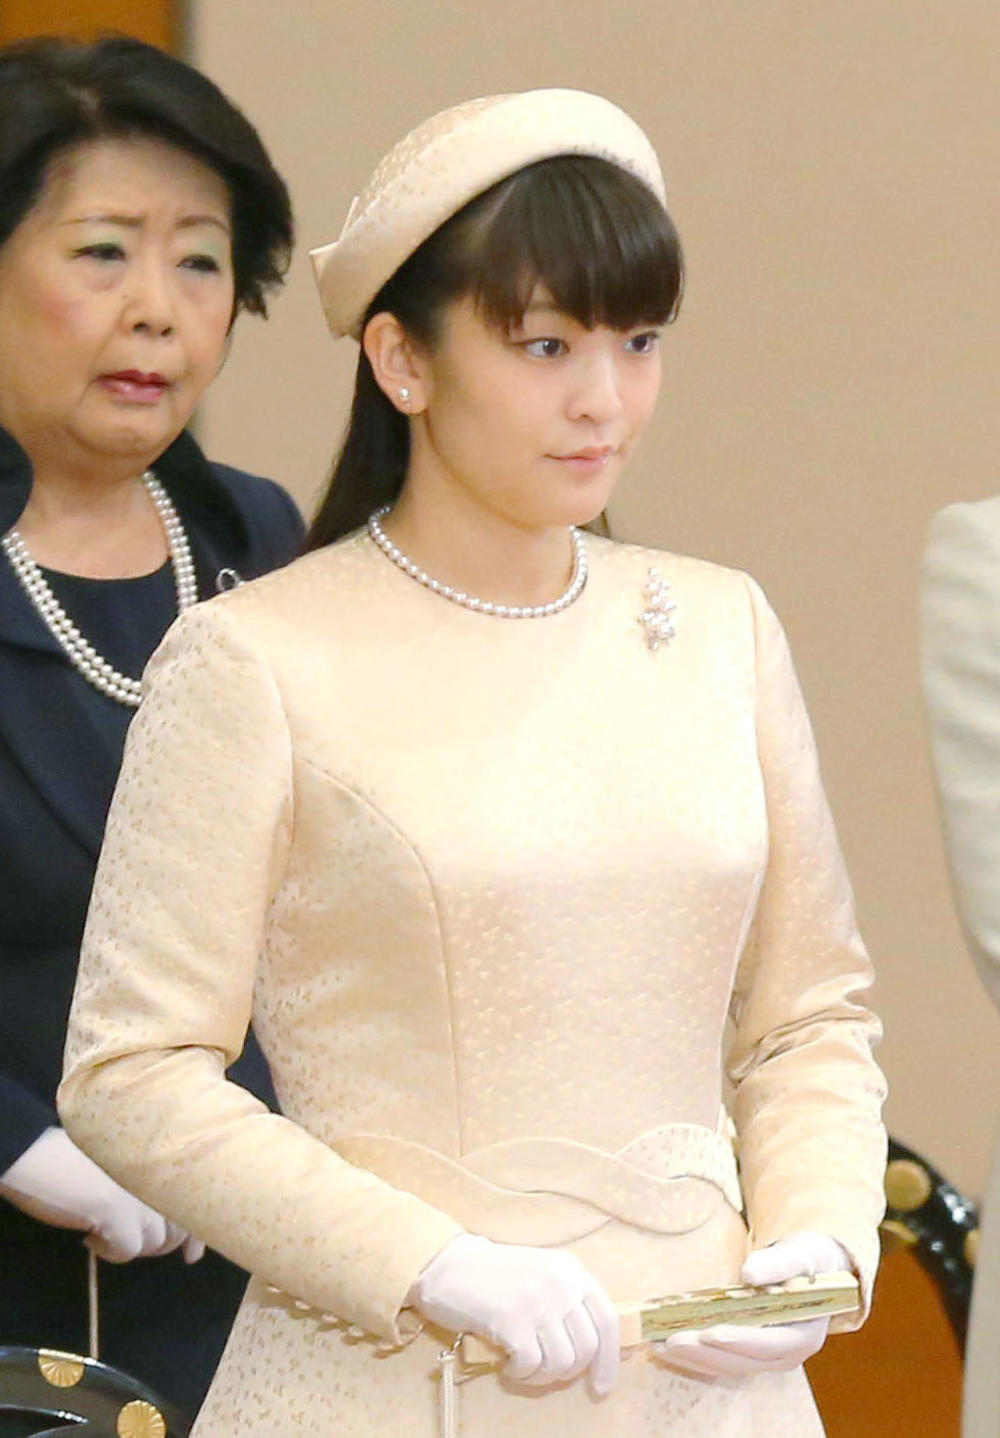 <p><strong>Princeza Mako</strong>, ćerka<strong> princa Fumuhita</strong>, brata i naslednika japanskog<strong> cara Naruhita</strong>, udala se za mladog pravnika i odrekla se svih beneficija koje je podrazumevao njen položaj, a onda stala ispred predstavnika medija kako bi otvoreno rekla šta joj je na duši. I nije se suzdržavala!</p>